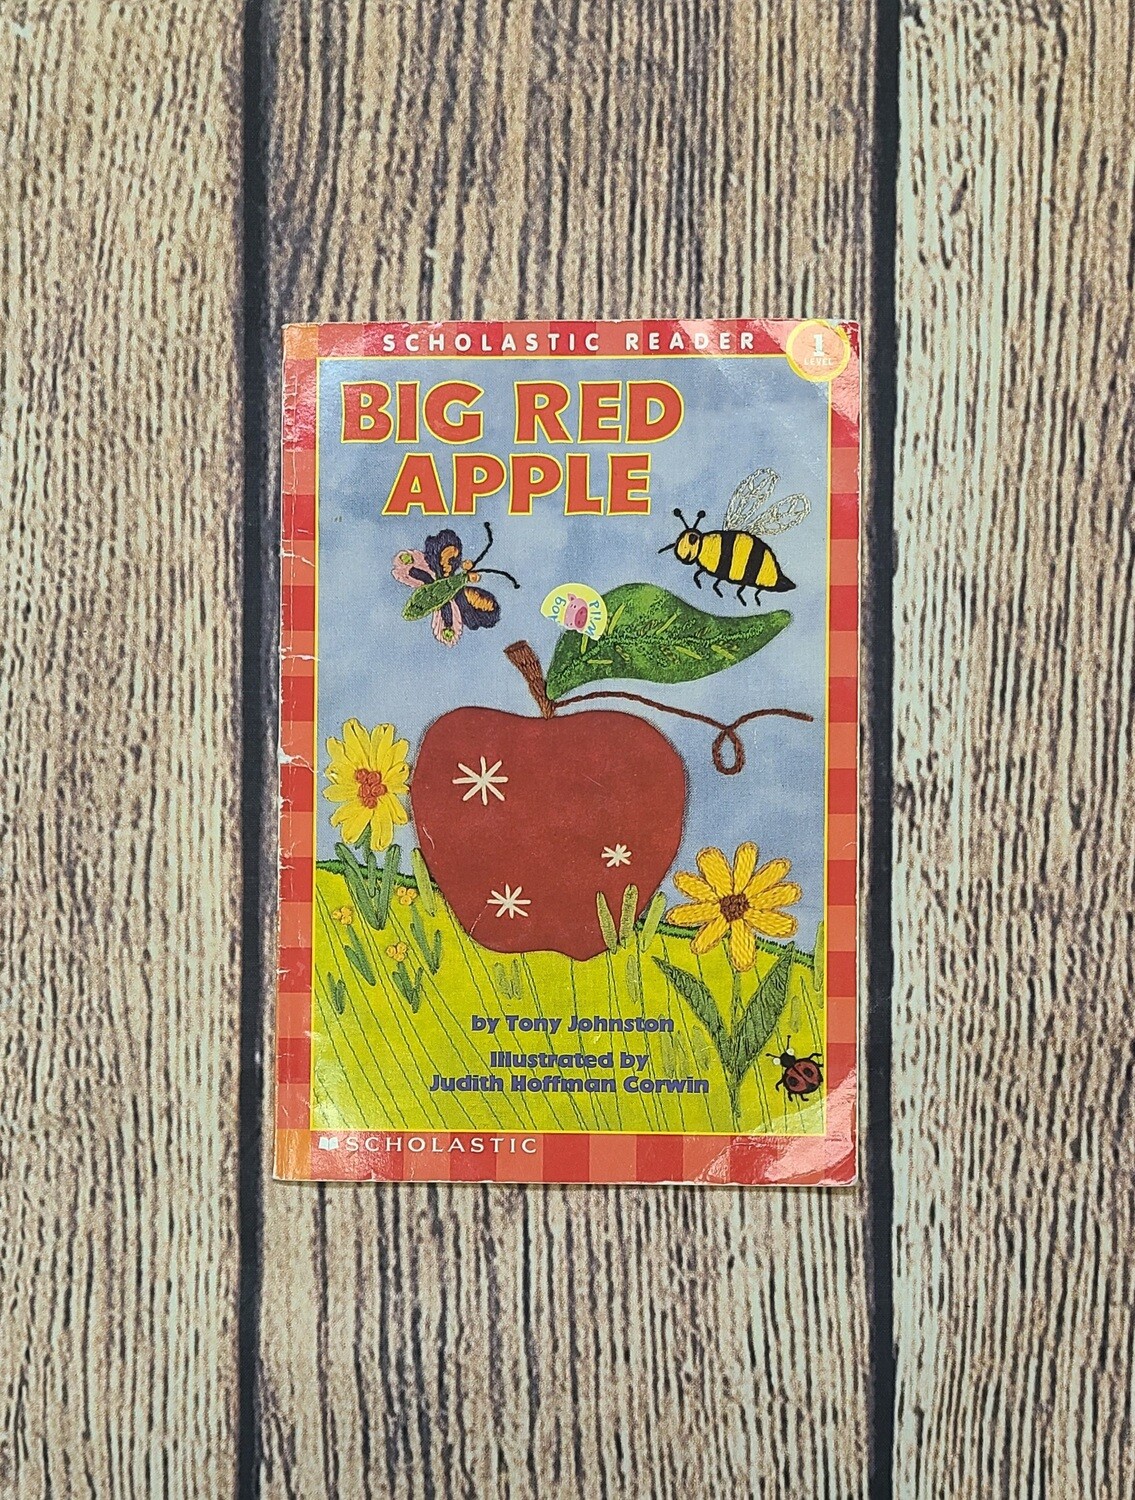 Big Red Apple by Tony Johnston